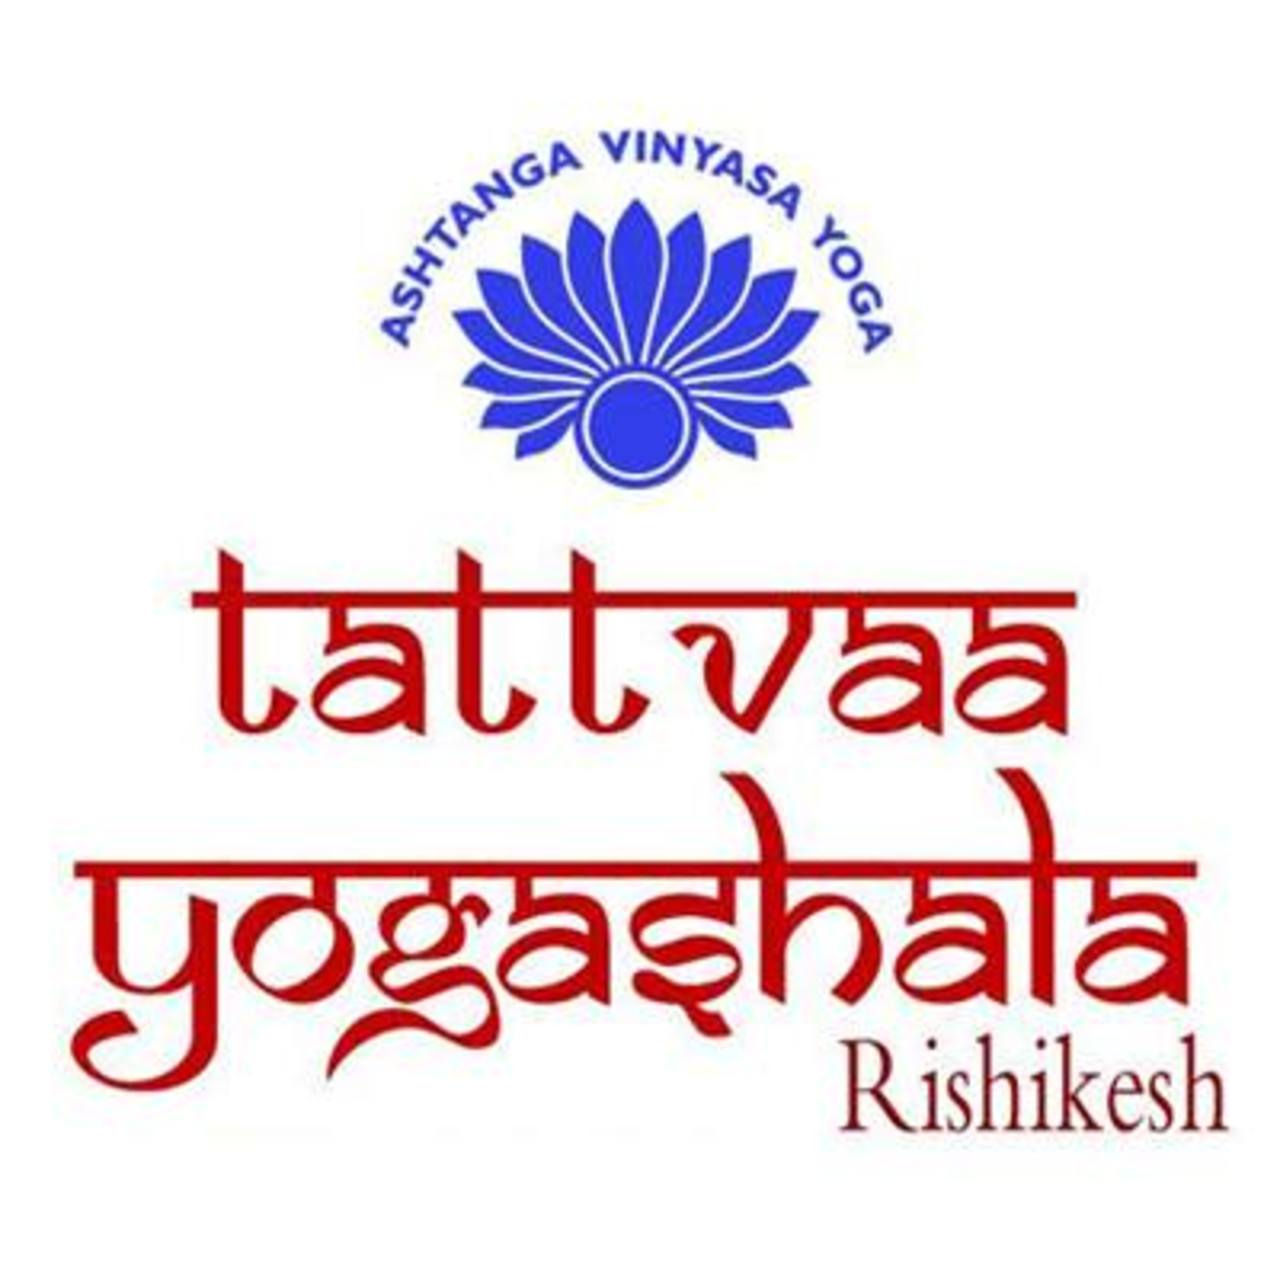 Tattvaa-Yogashala